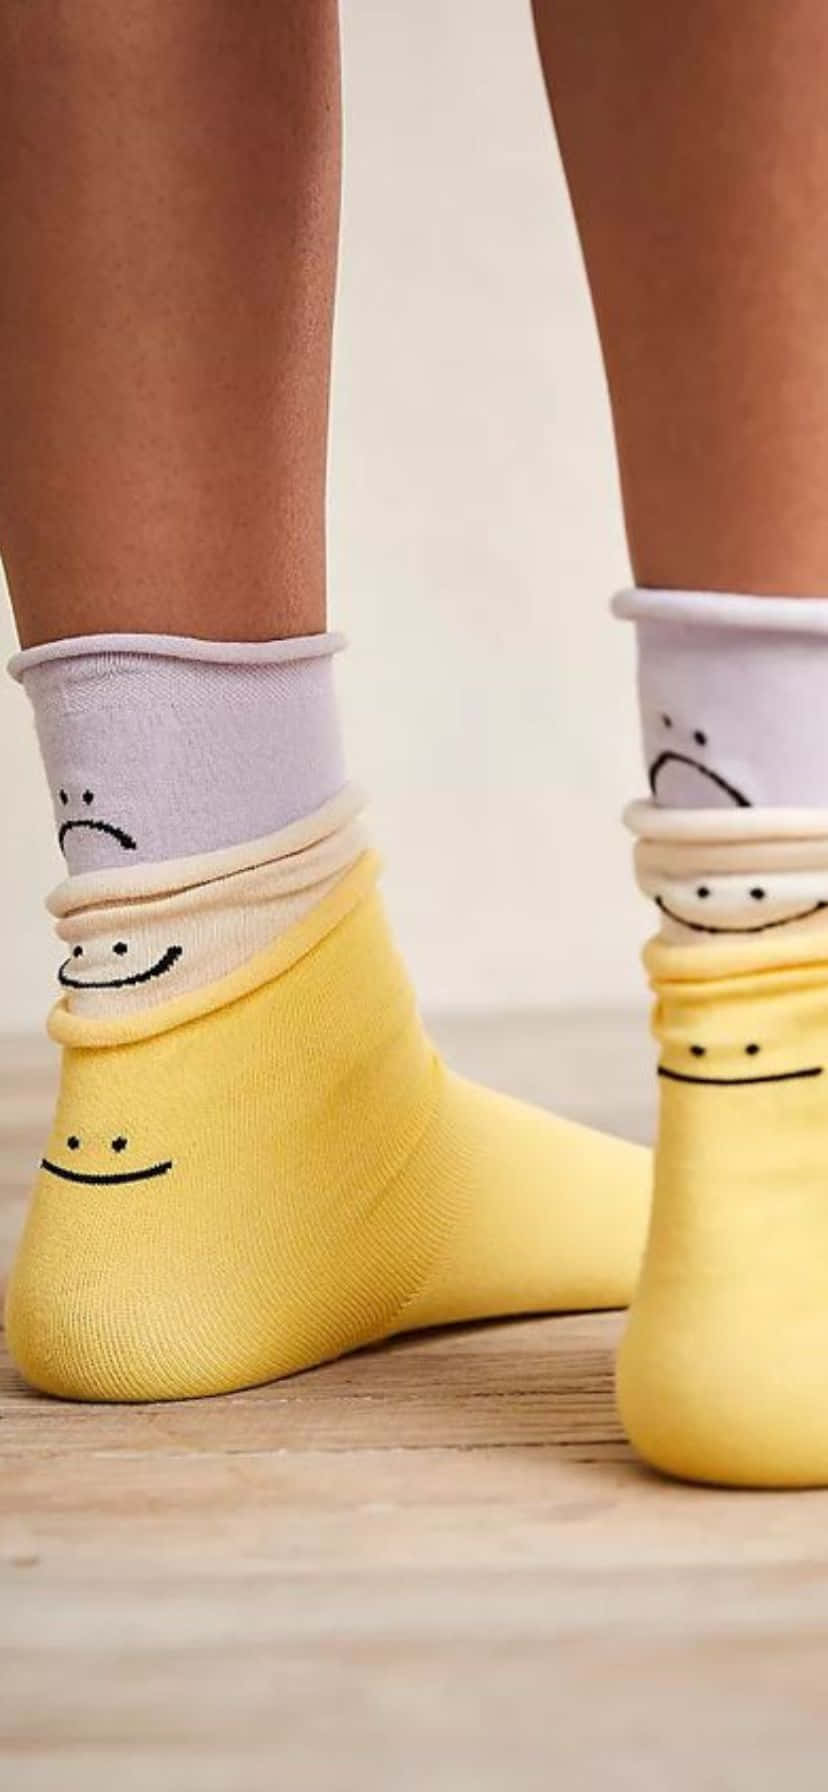 Smiley Face Sockson Feet Wallpaper